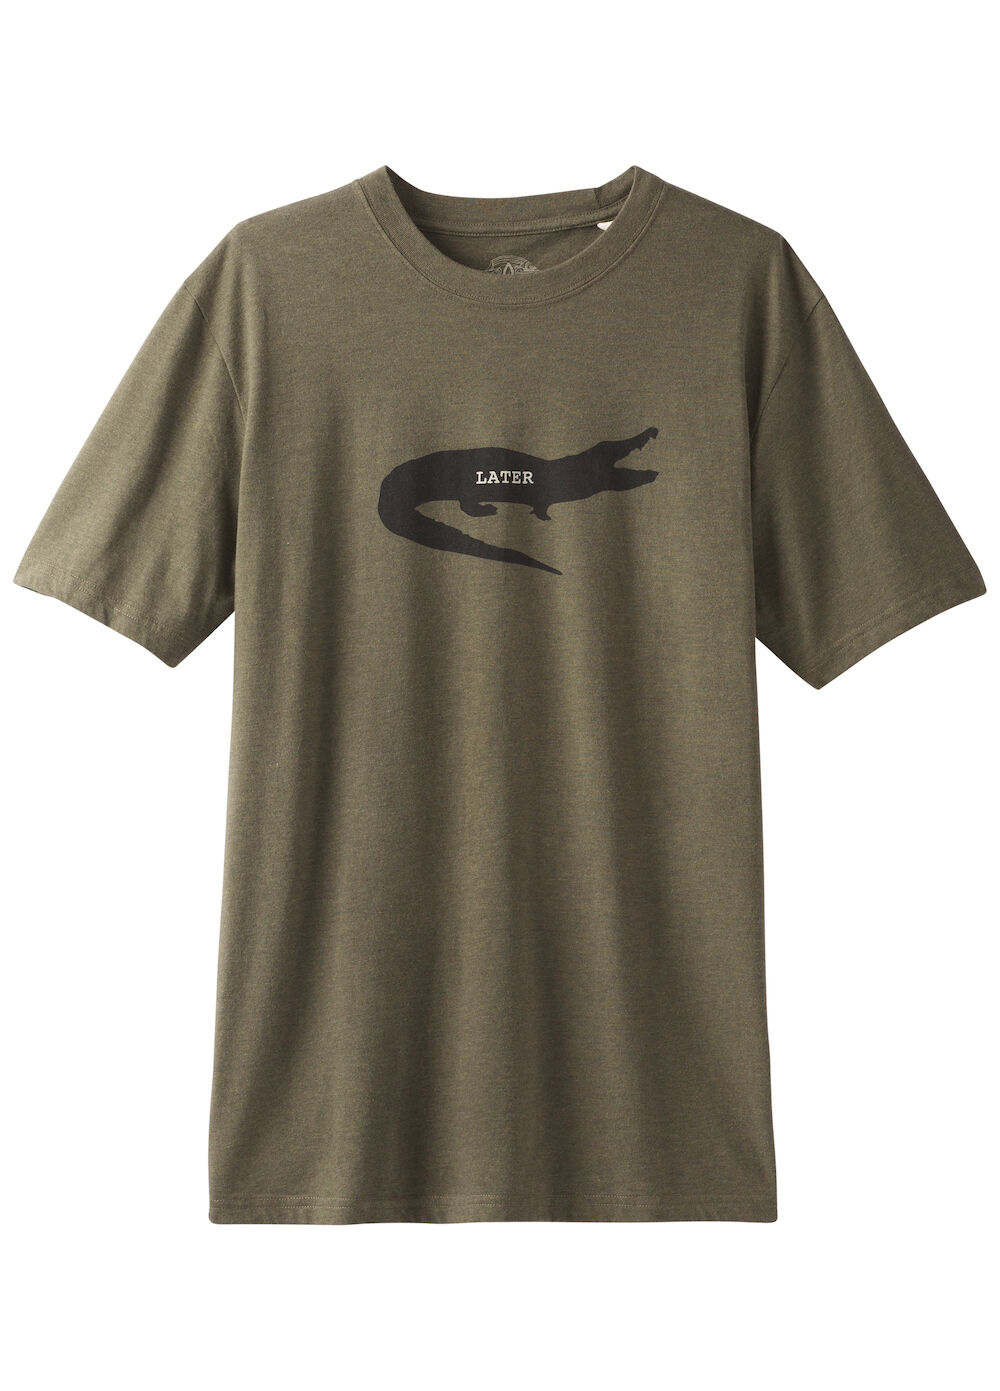 Prana Later Gator Journeyman - T-Shirt - Men's